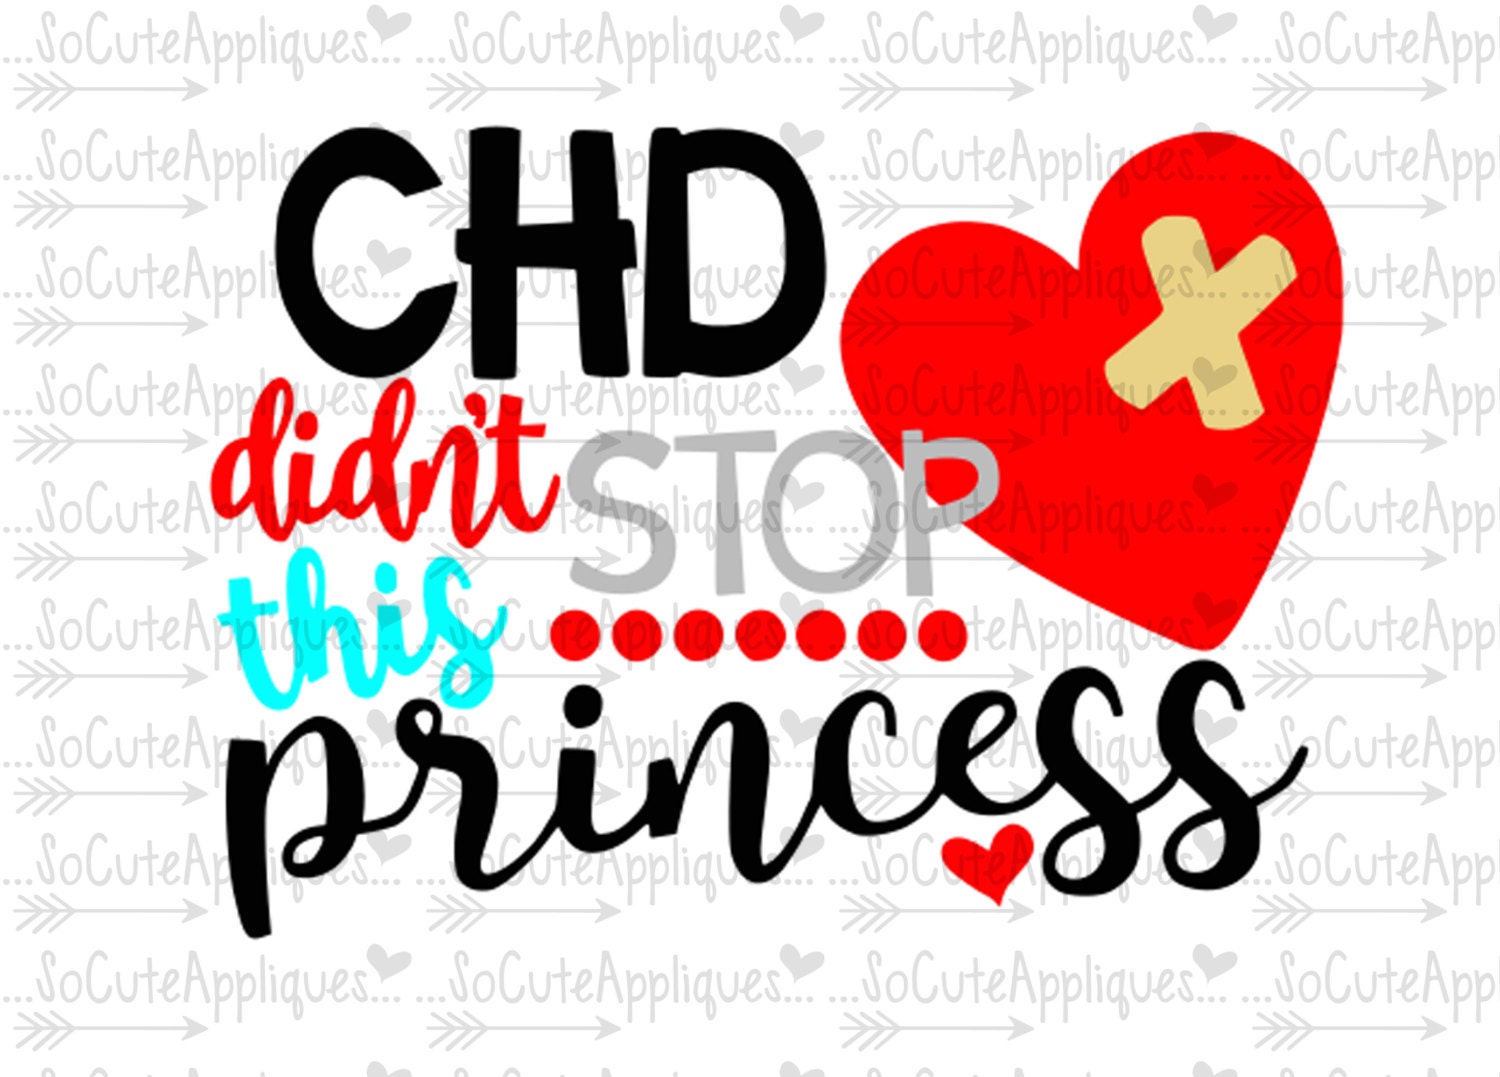 Download SVG DXF EPS Cut file Chd didn't stop this princess Chd